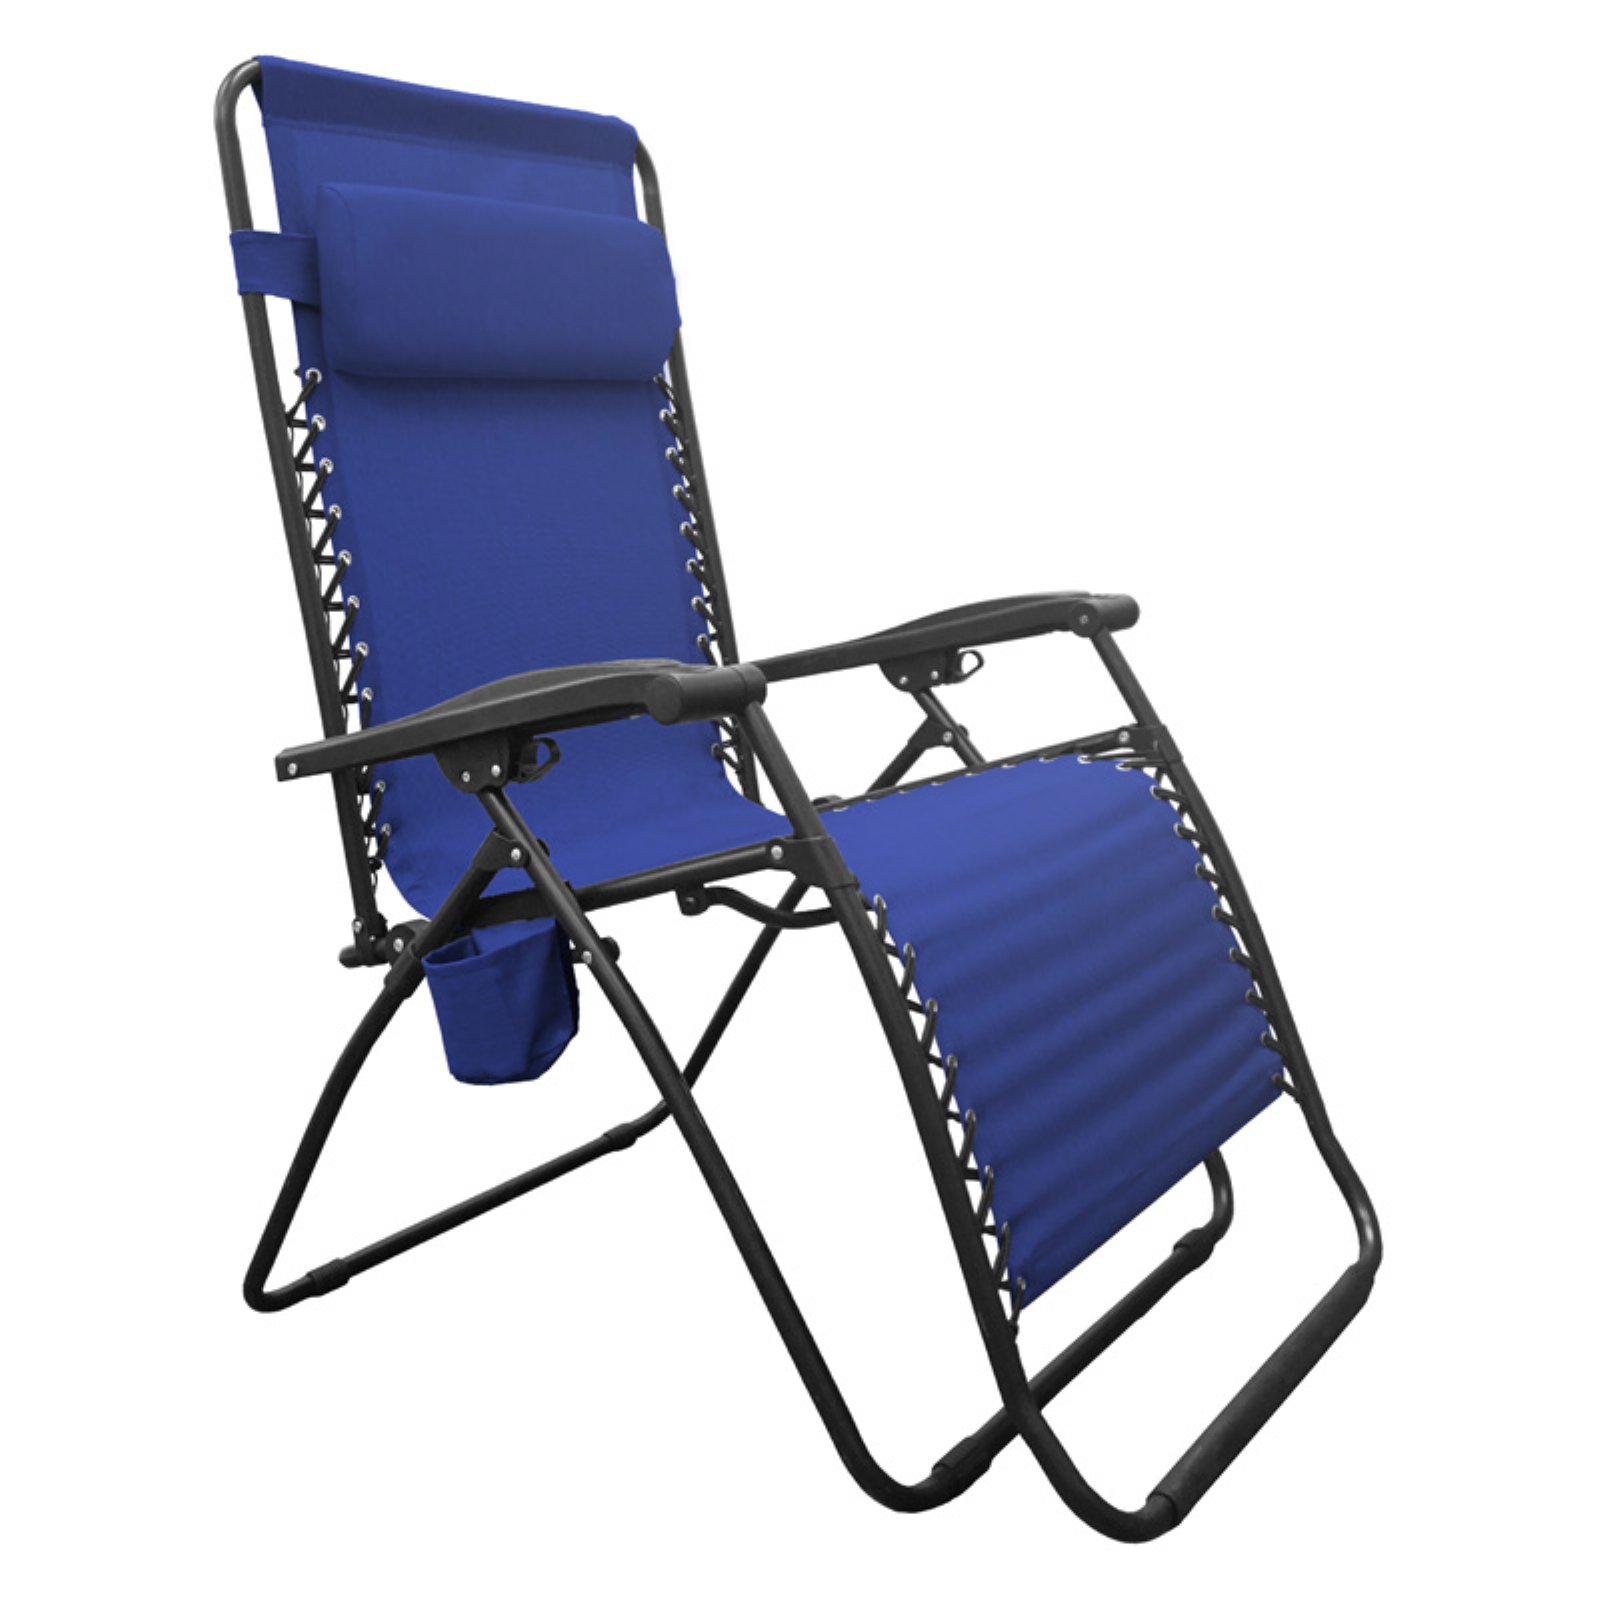 Caravan Sports Infinity Big Boy Zero Gravity Chair Blue - image 2 of 2